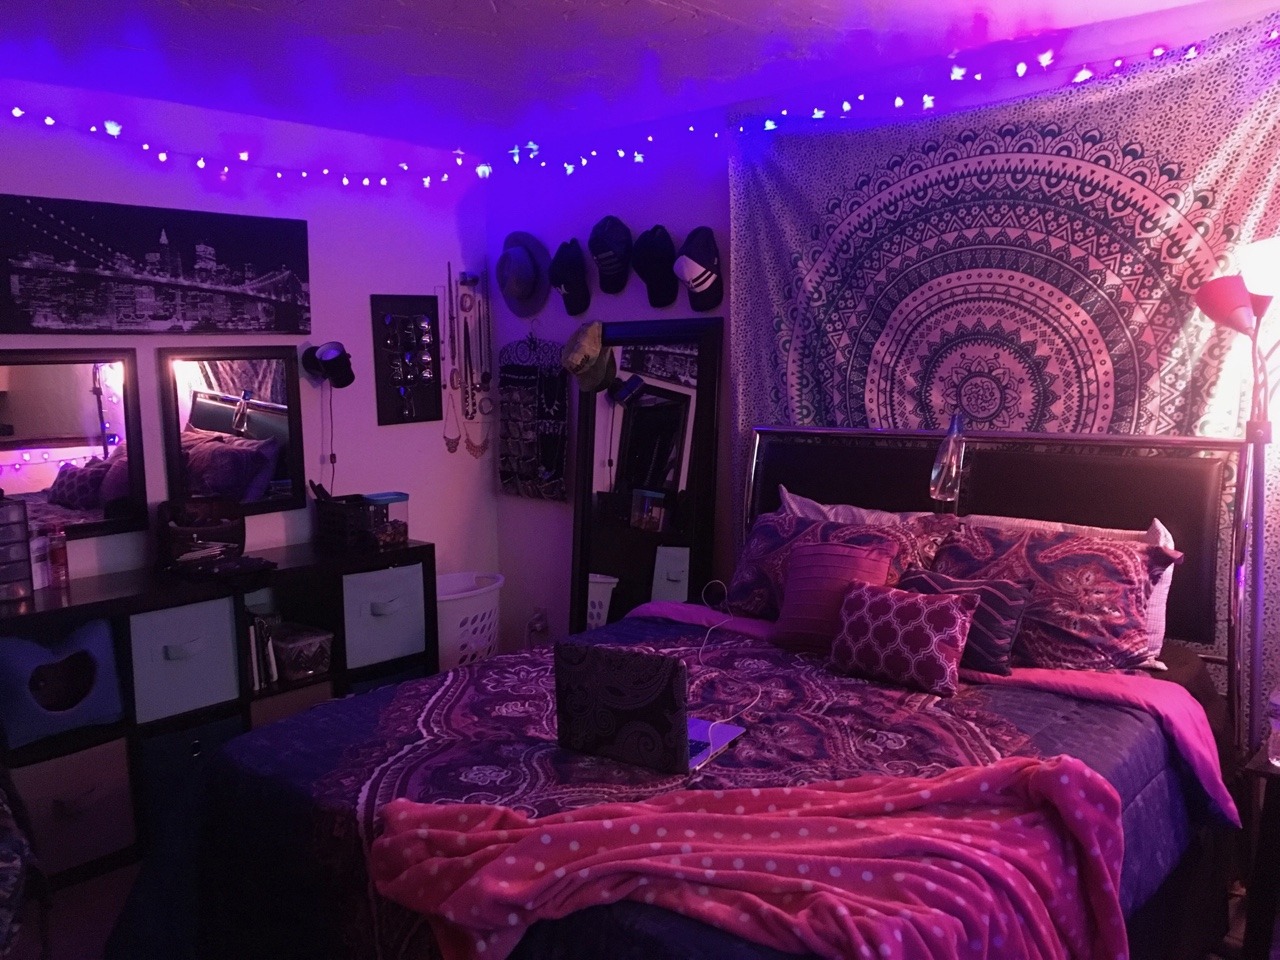  Bedroom  Aesthetic  Bedroom  Inspiration Fairy  Lights  